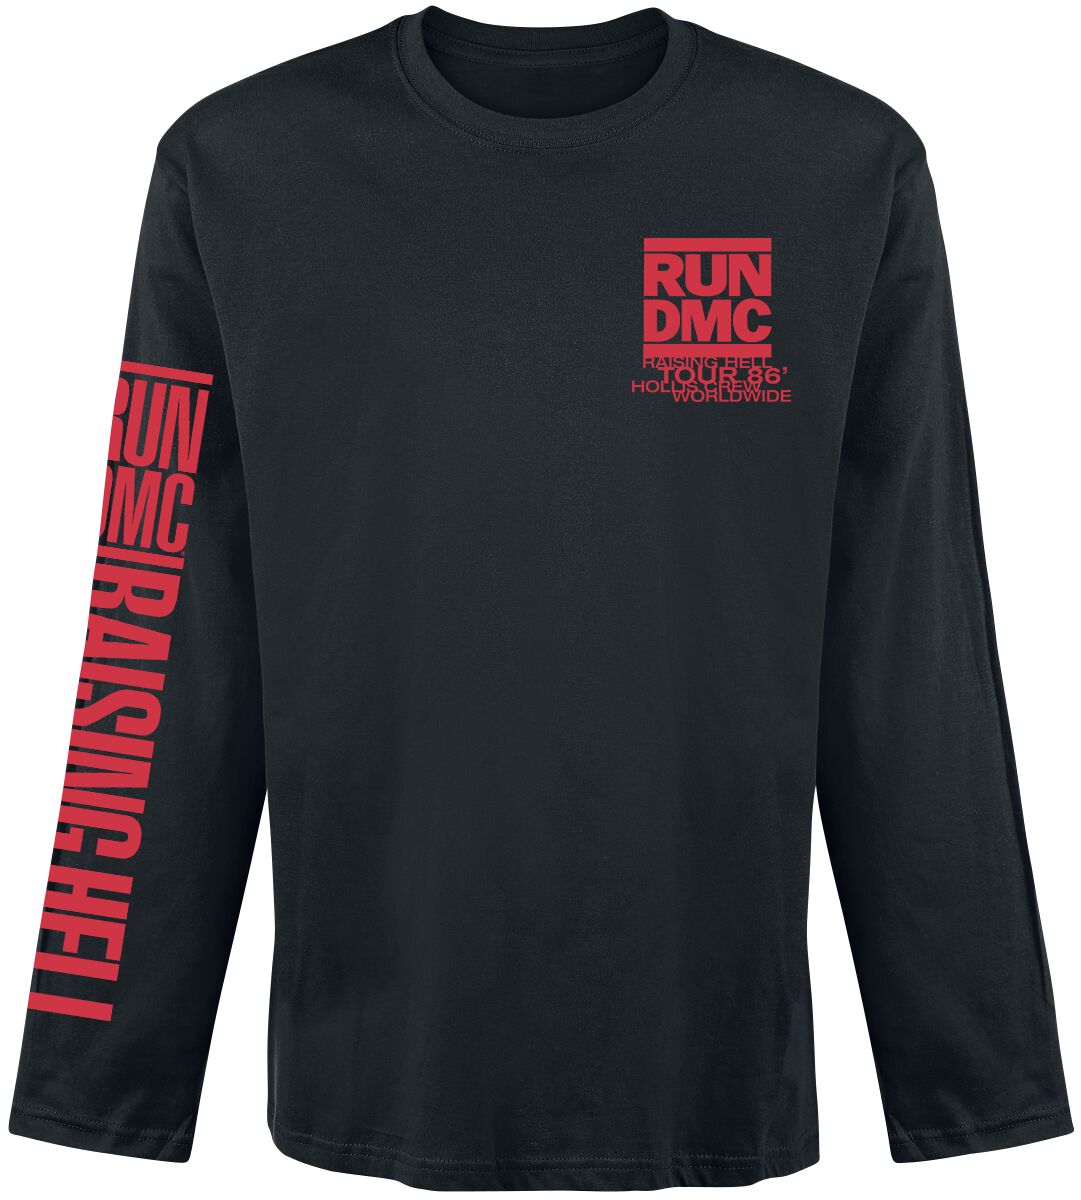 Run DMC Raising Hell Tour 86 Langarmshirt schwarz in XXL